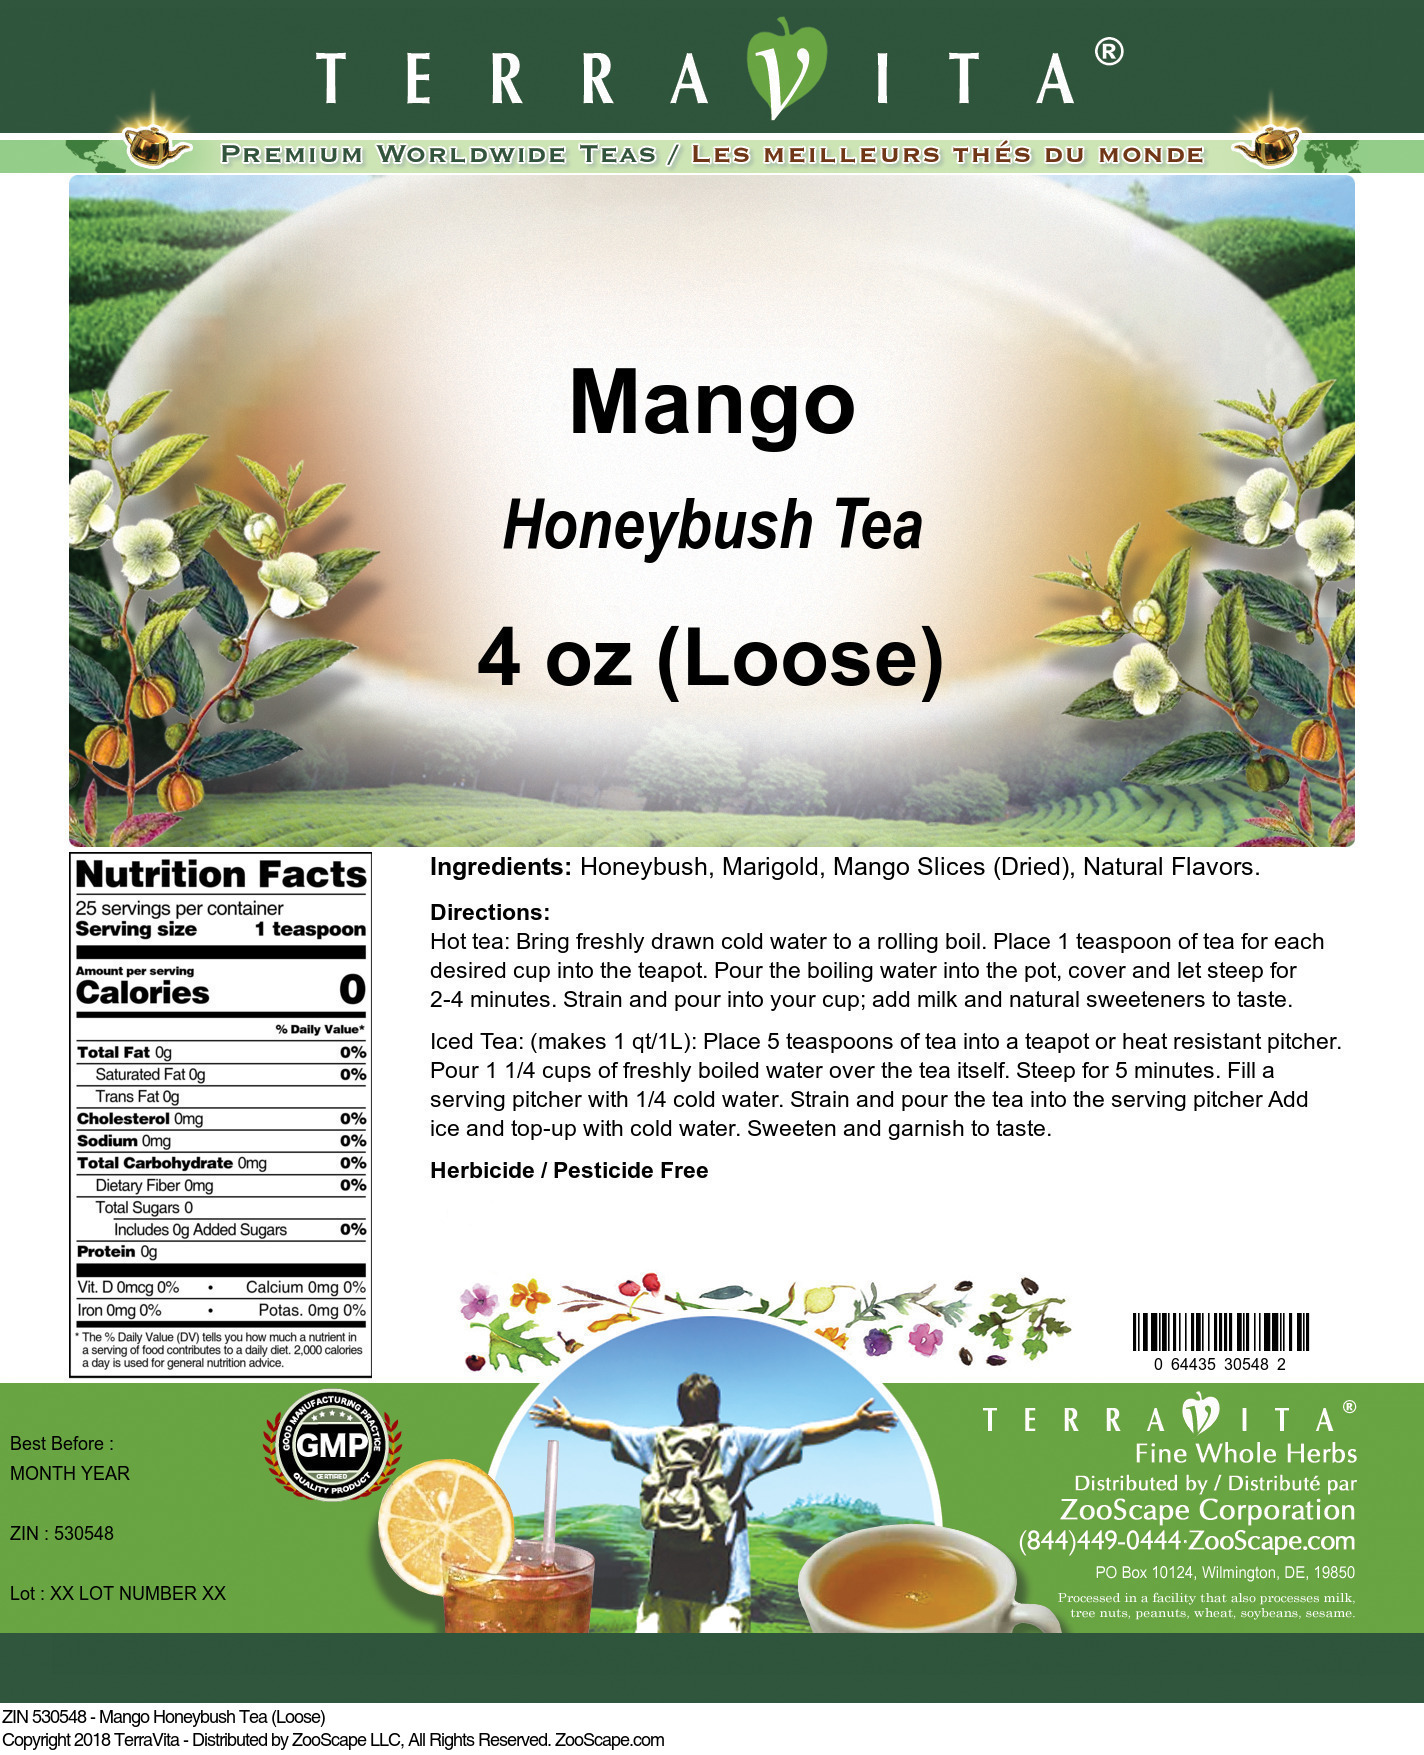 Mango Honeybush Tea (Loose) - Label